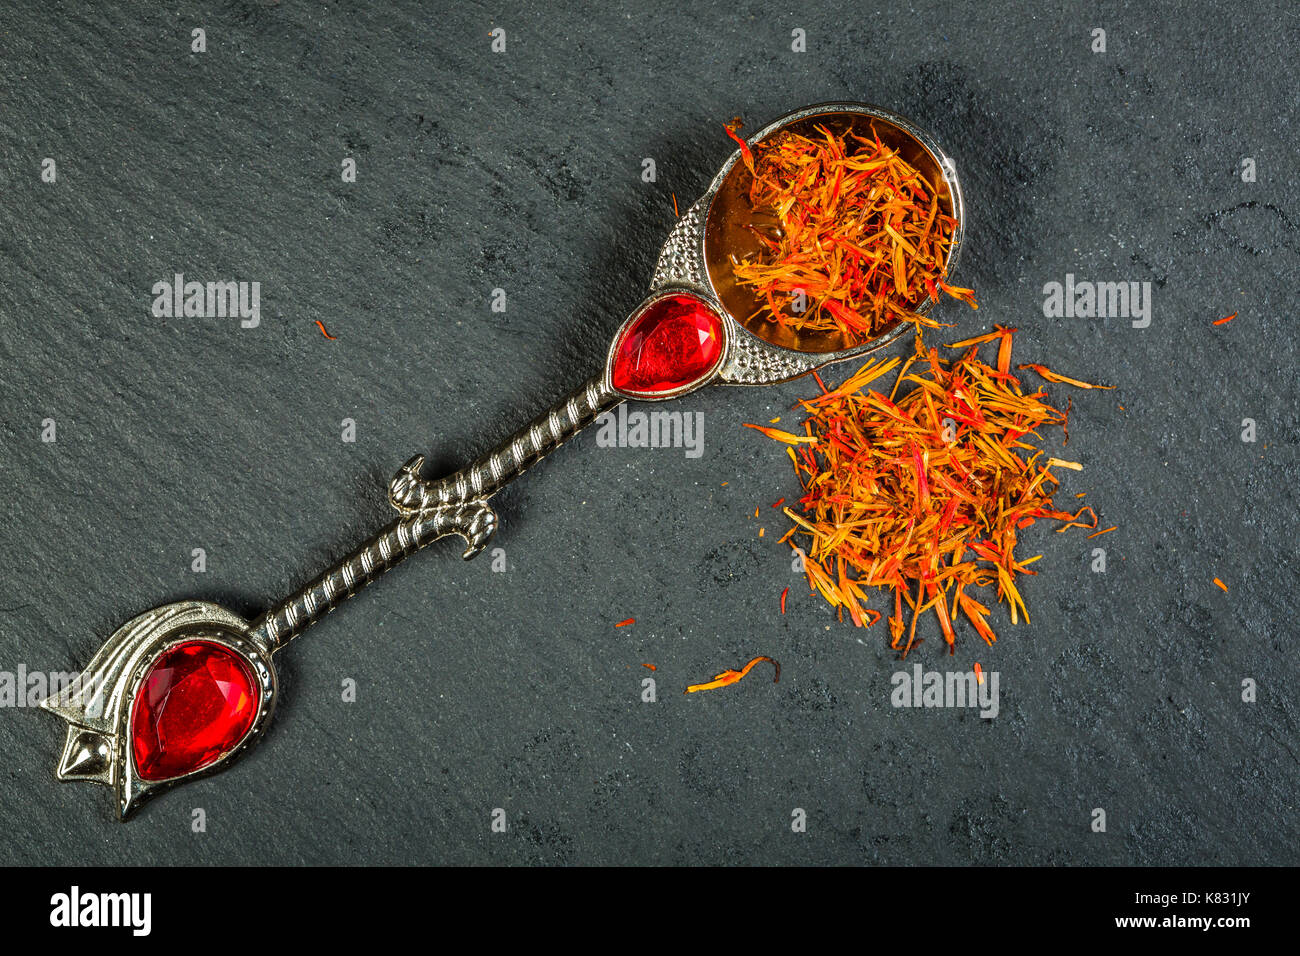 Turkish saffron. It is often used in Arabic cuisine. Stock Photo